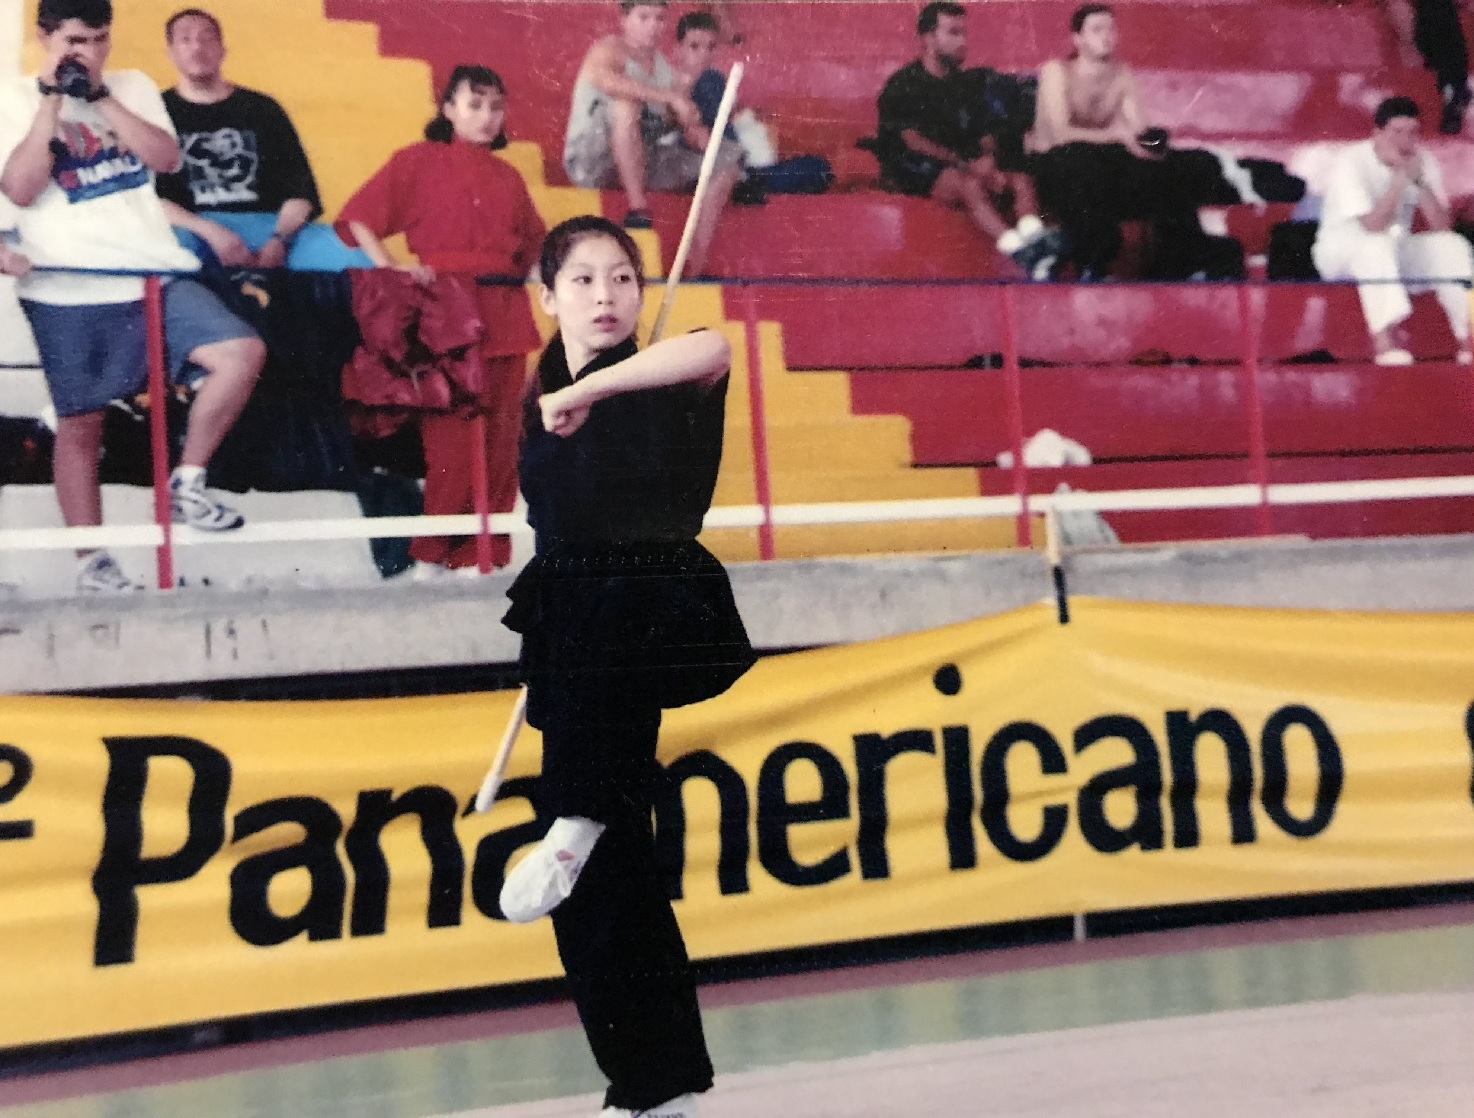 At an early Pan-American Wushu Championships